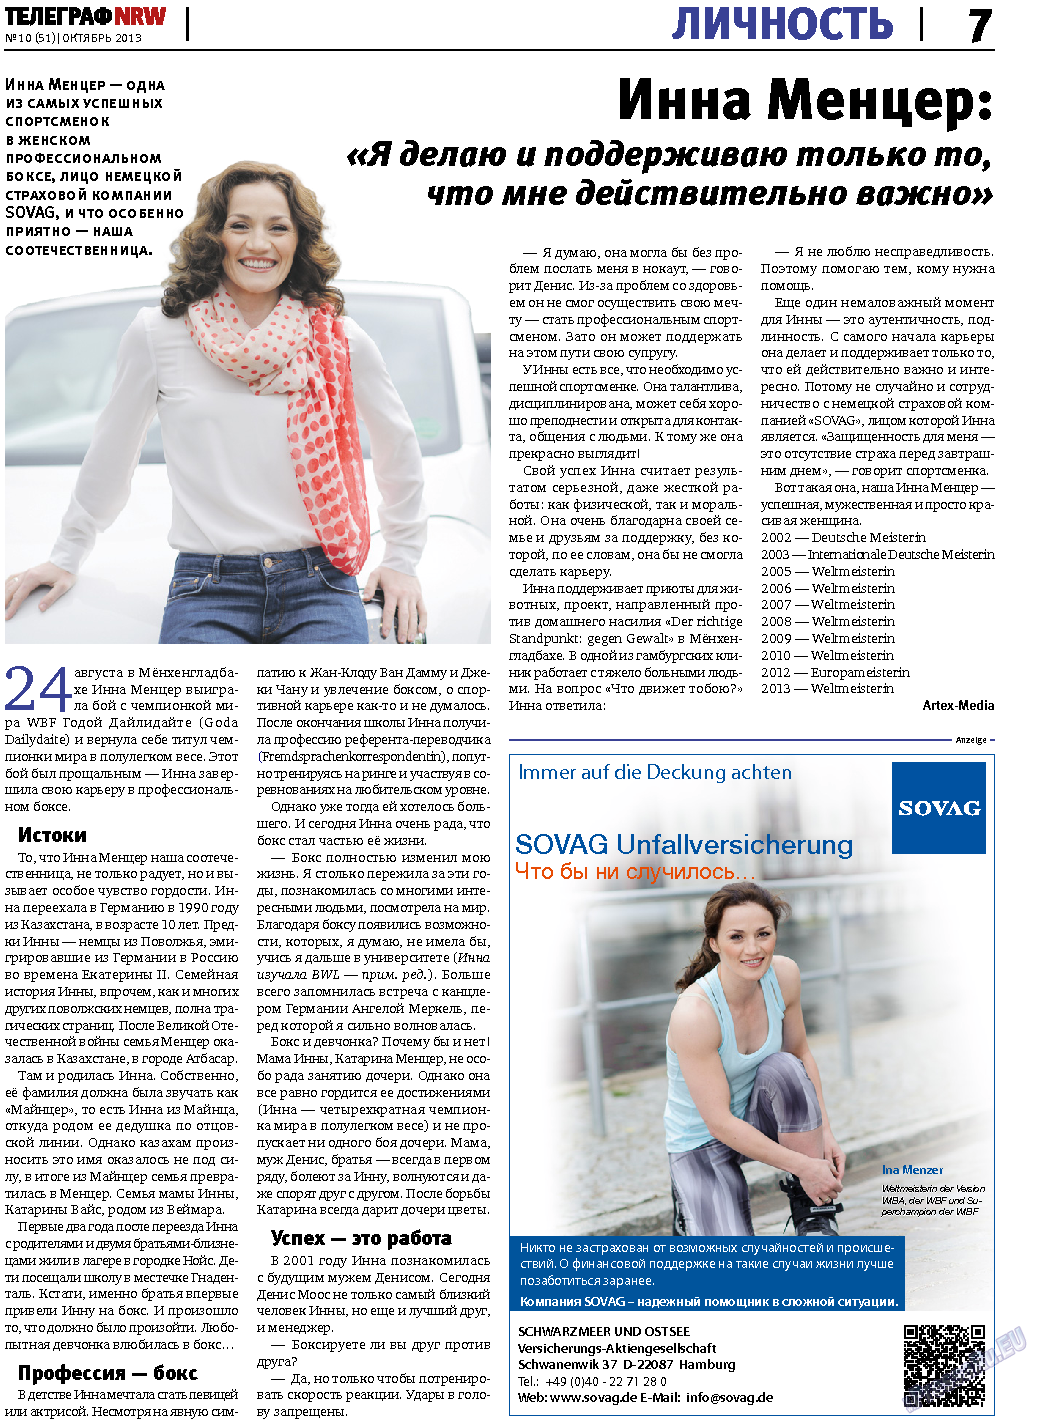 Телеграф NRW, газета. 2013 №10 стр.7